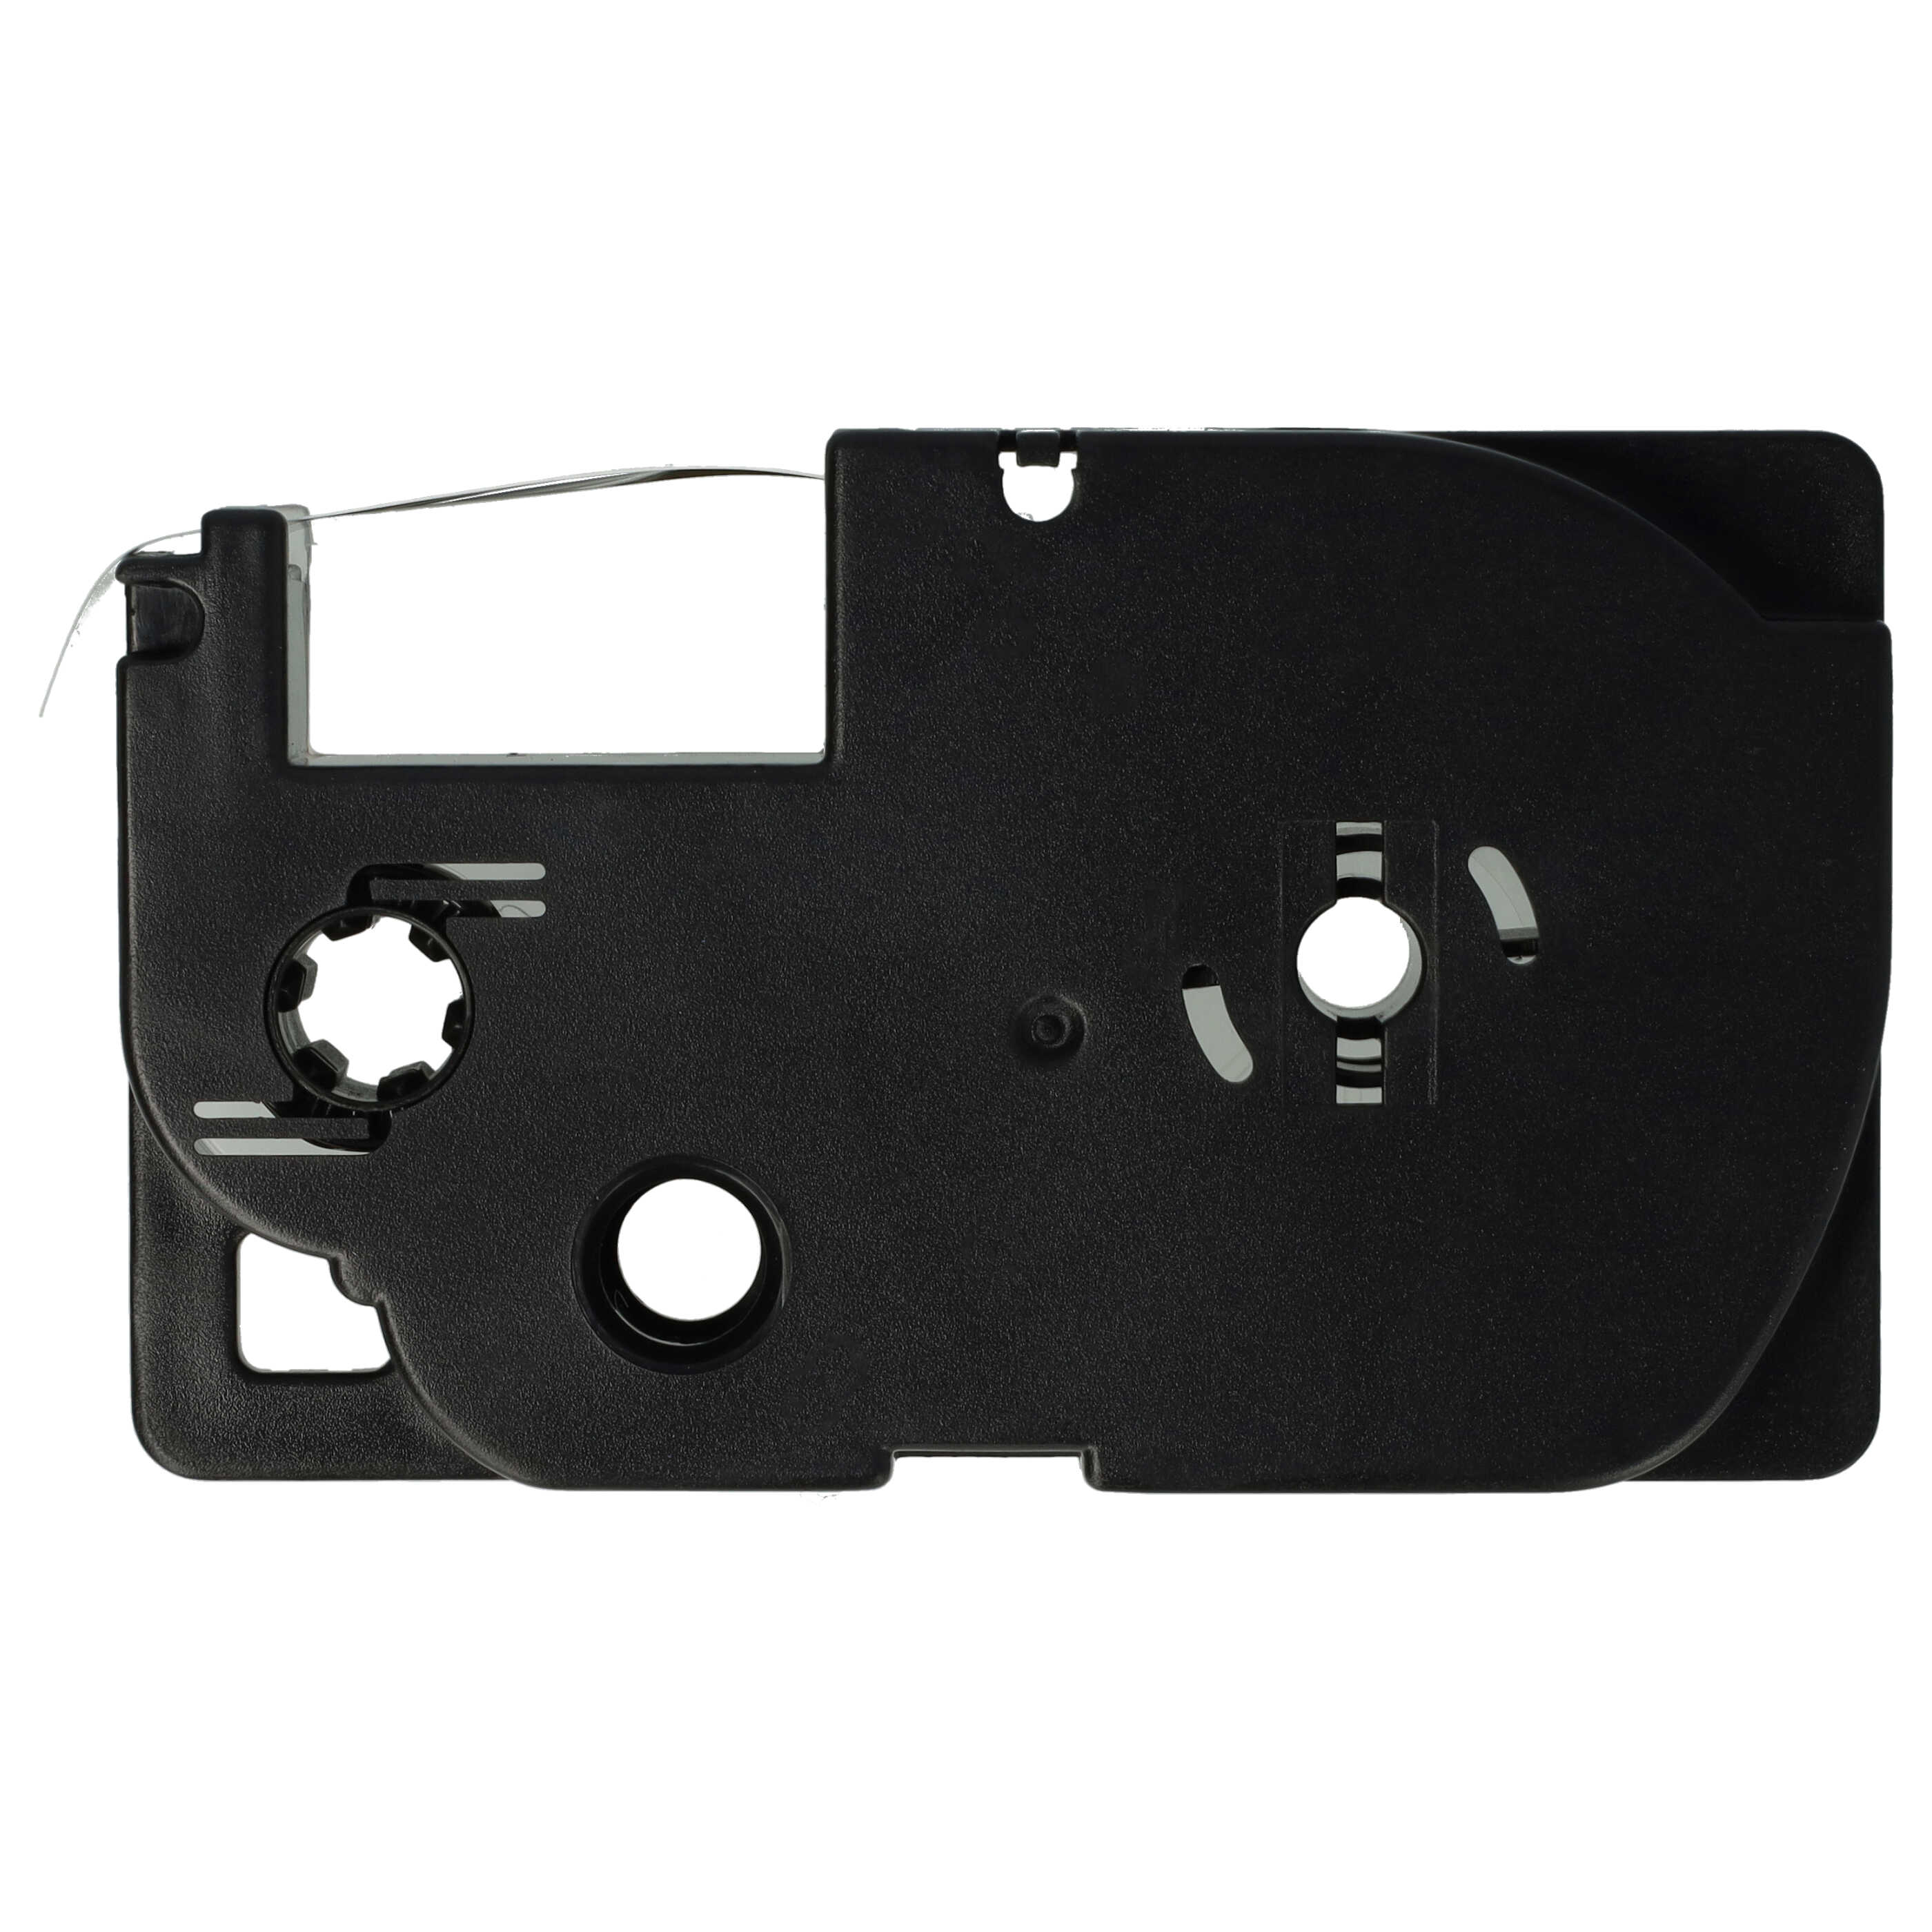 10x Cassetta nastro sostituisce Casio XR-9WE1 per etichettatrice Casio 9mm nero su bianco